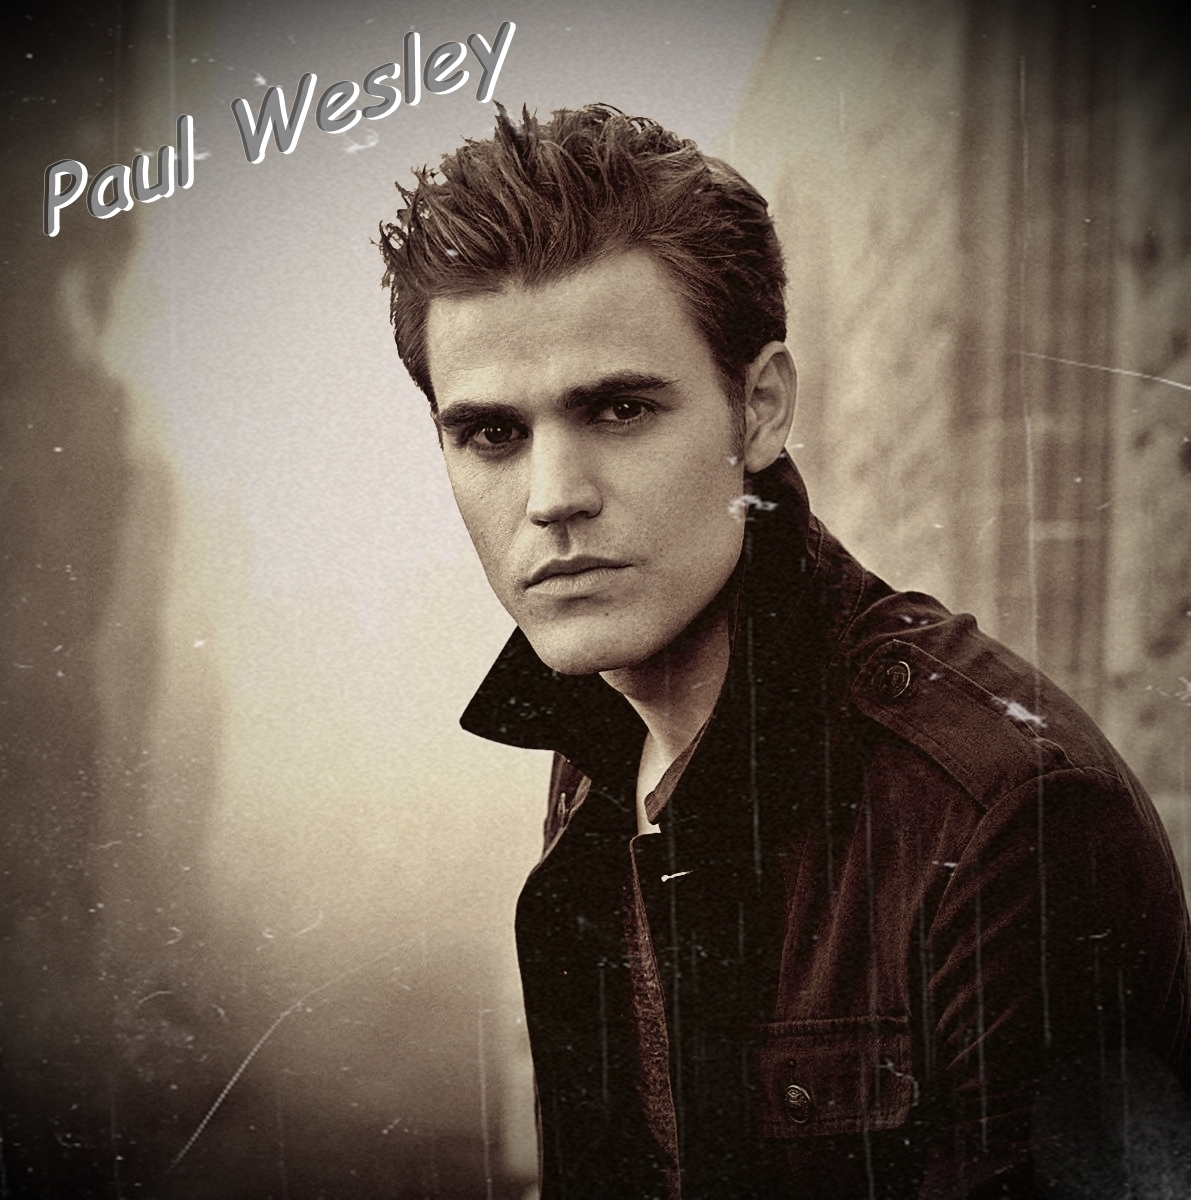 Paul Wesley - Photos Hot